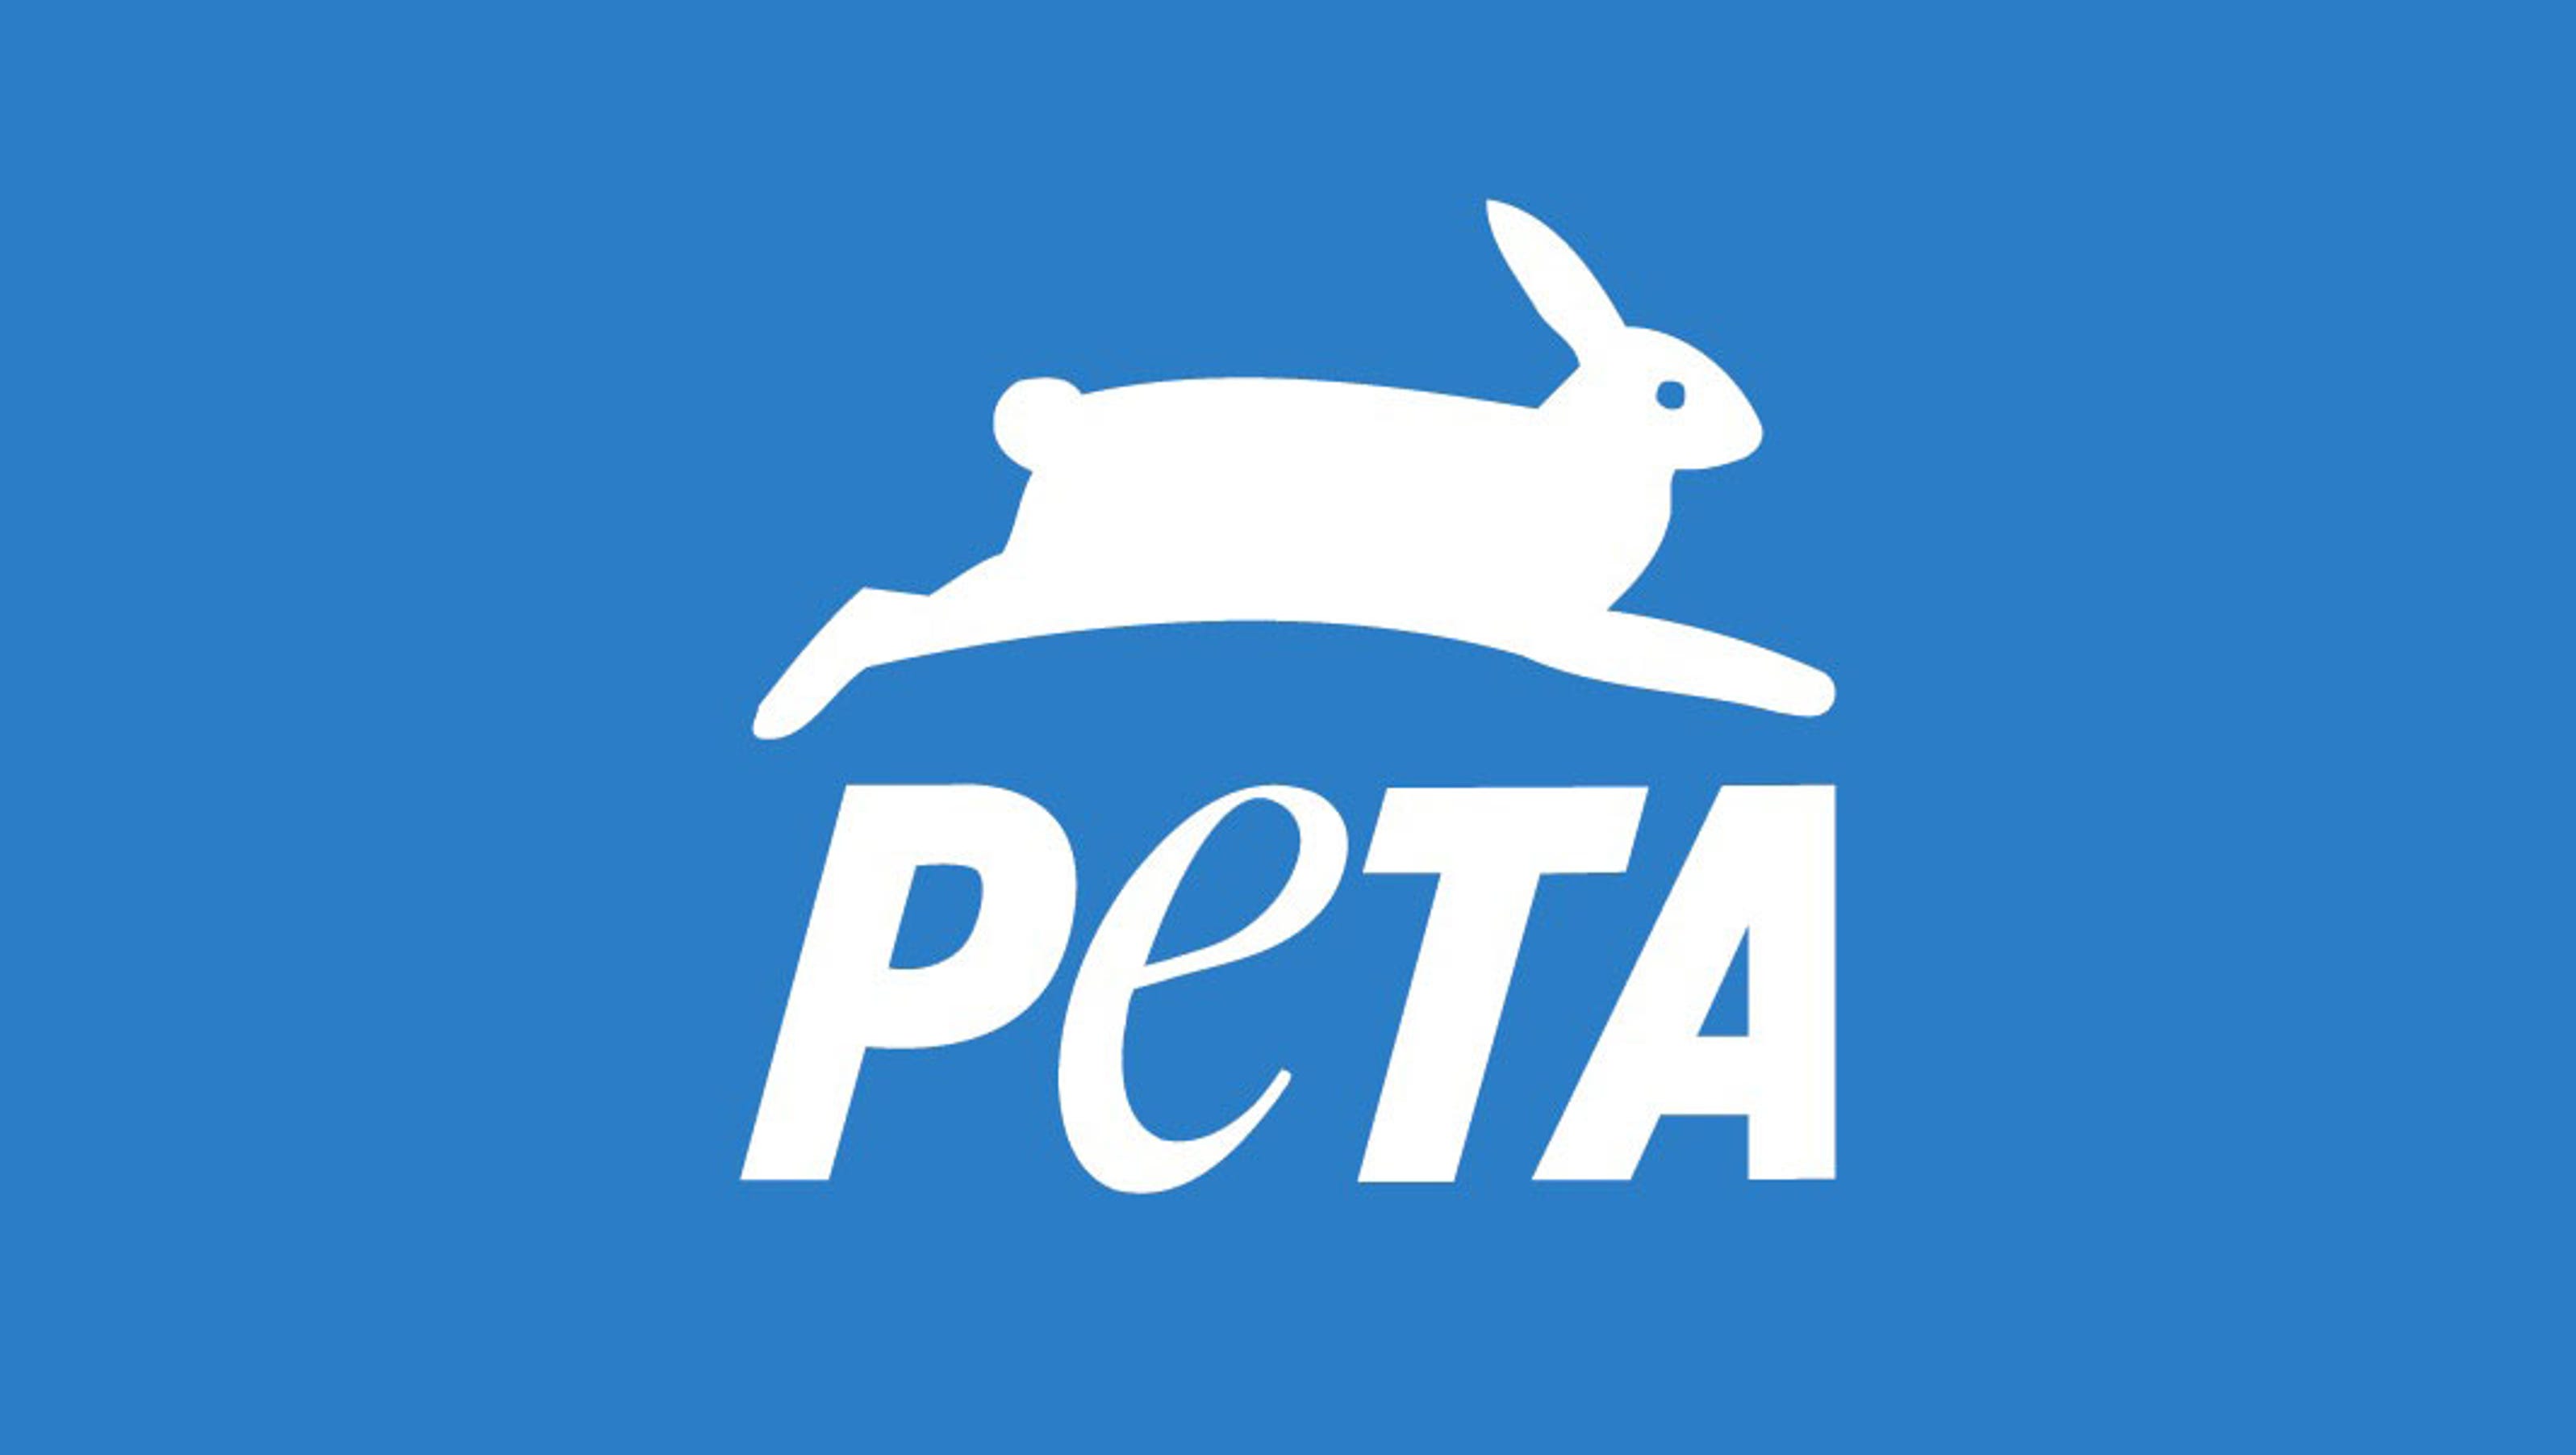 PETA upset over Phoenix church's Christmas show